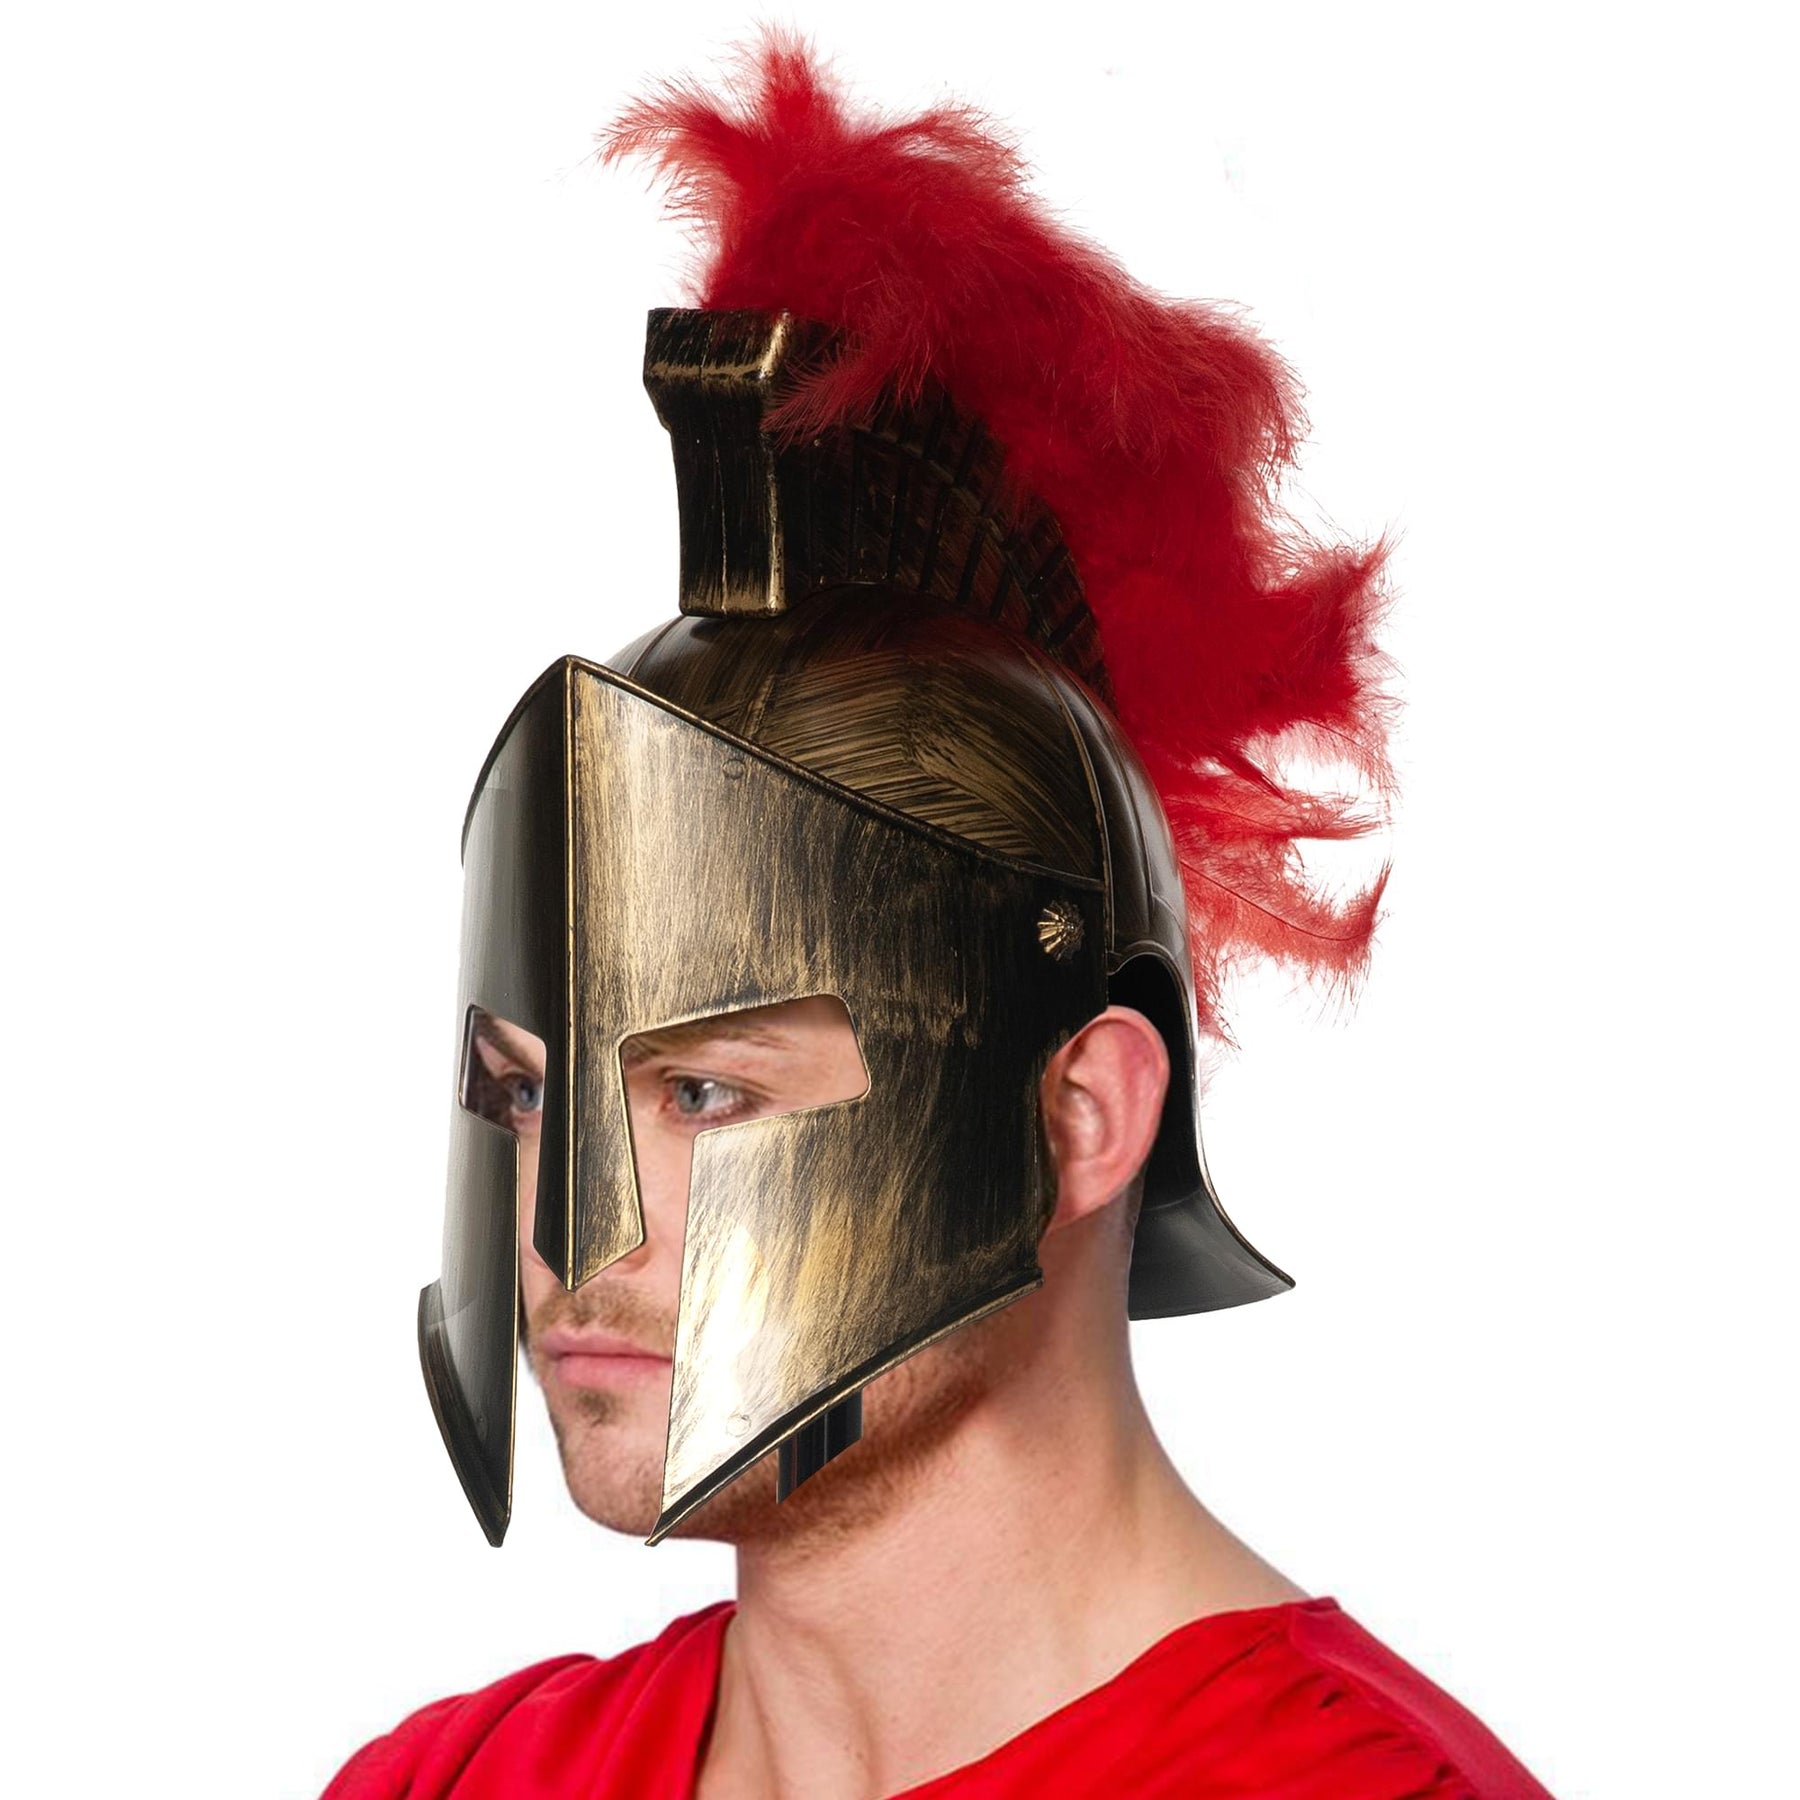 Bronze Roman Gladiator Helmet with Feathers Adult Costume Accessory